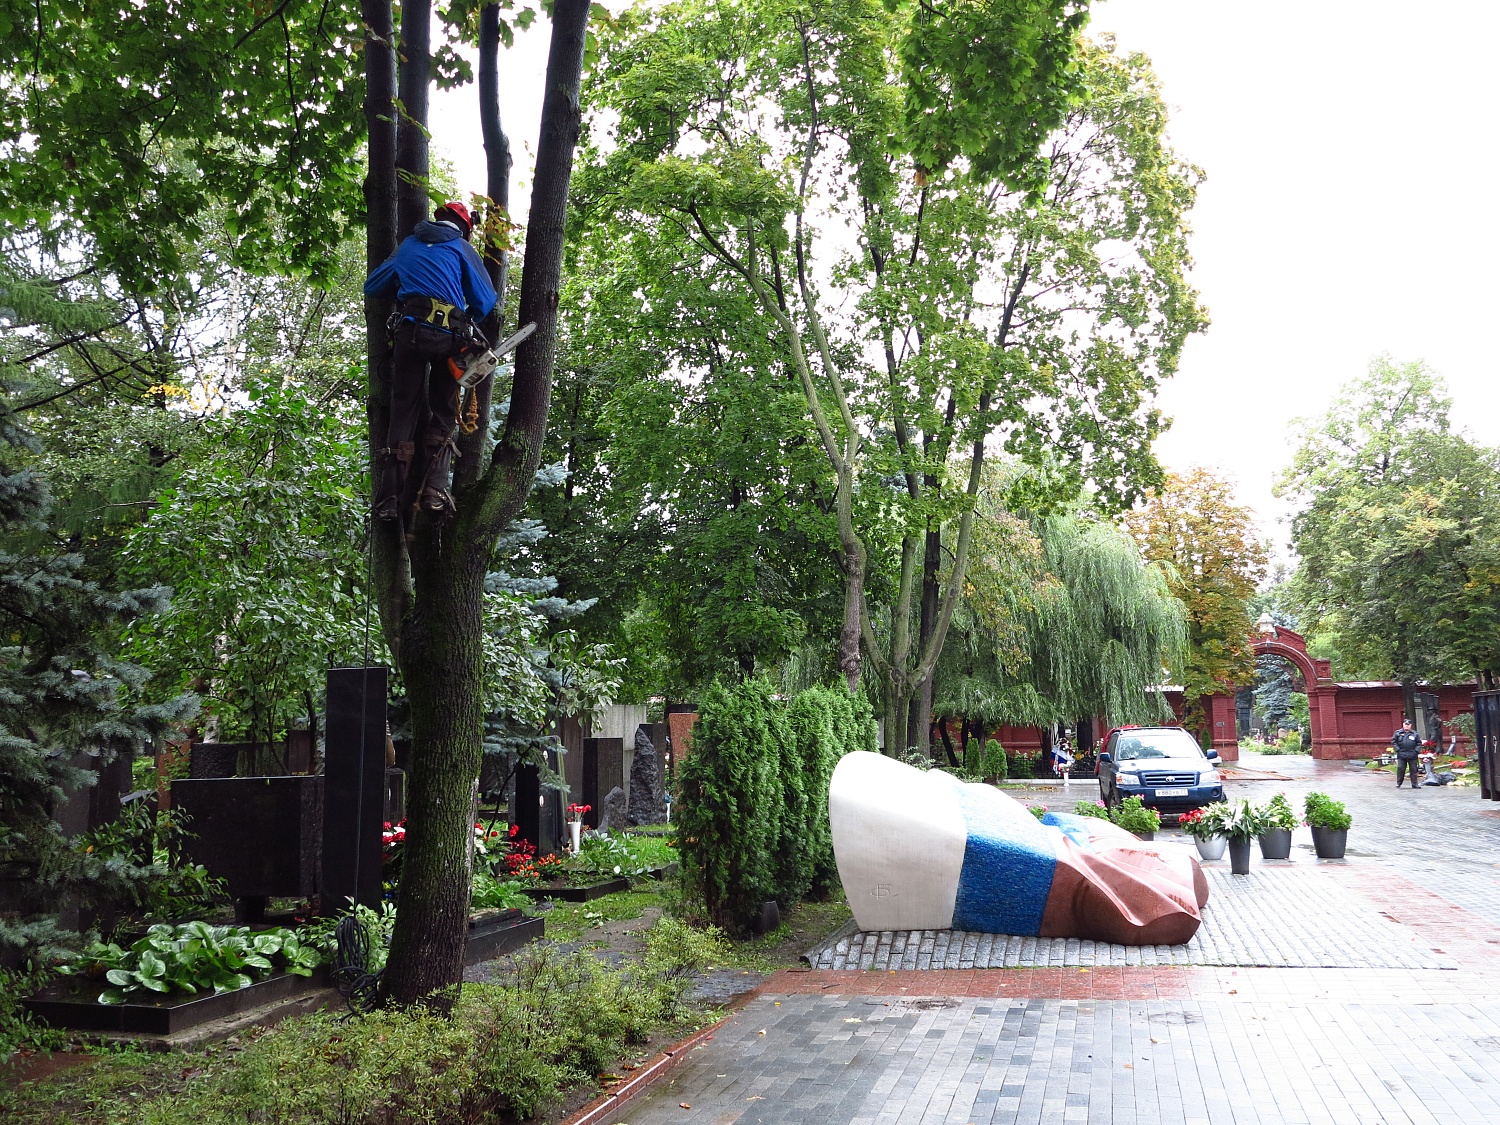 Удаление дерева могиле первого президента РФ - Ельцина Бориса Николаевича